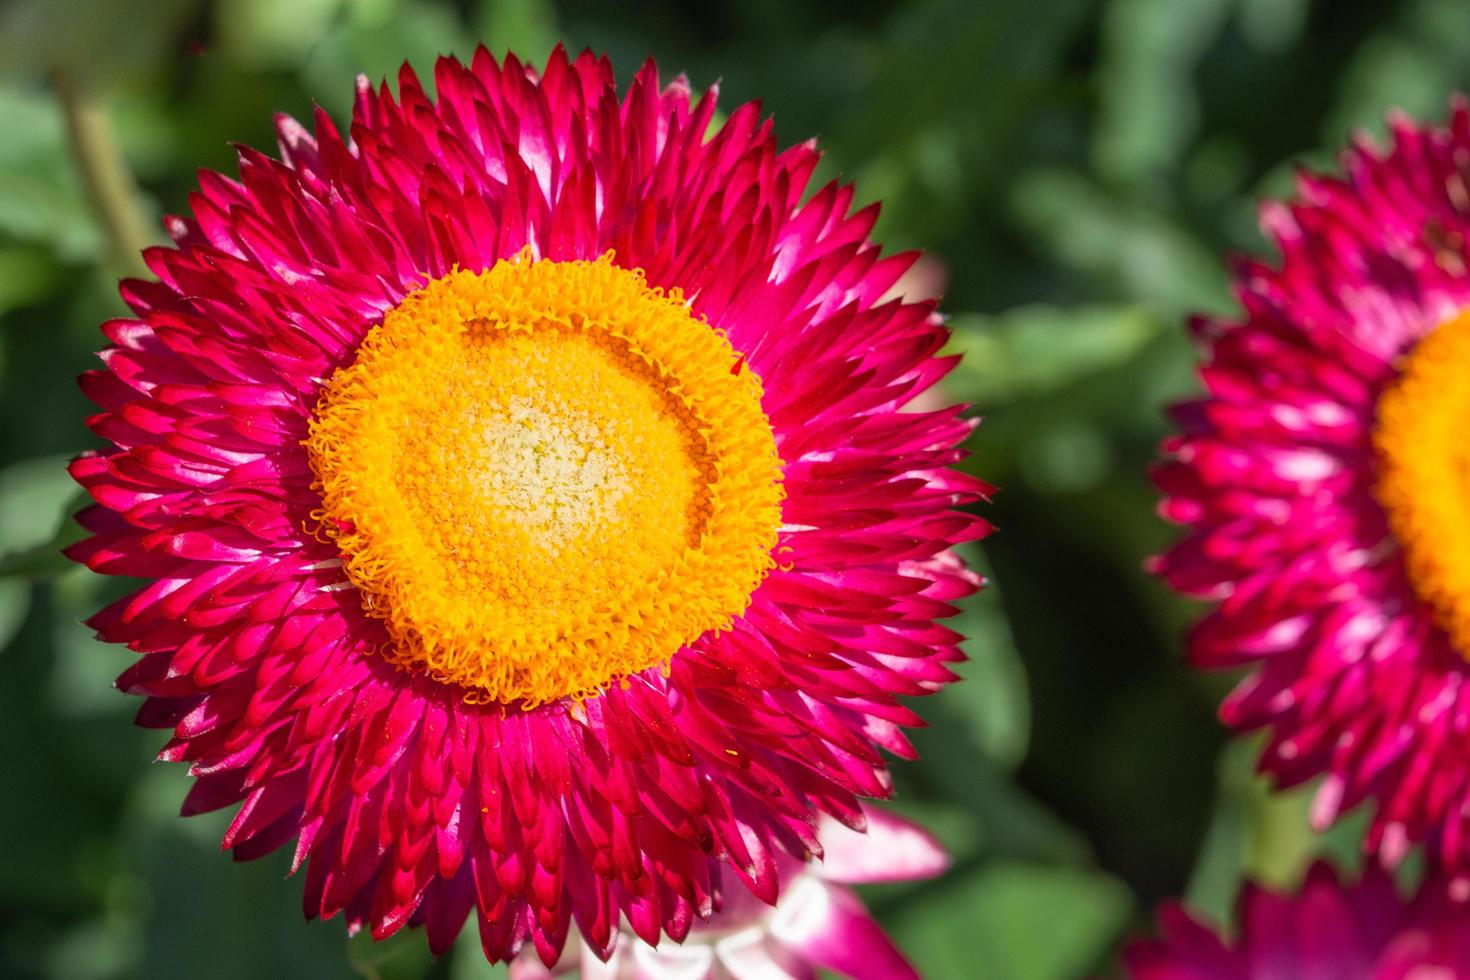 Straw flower close-up photo